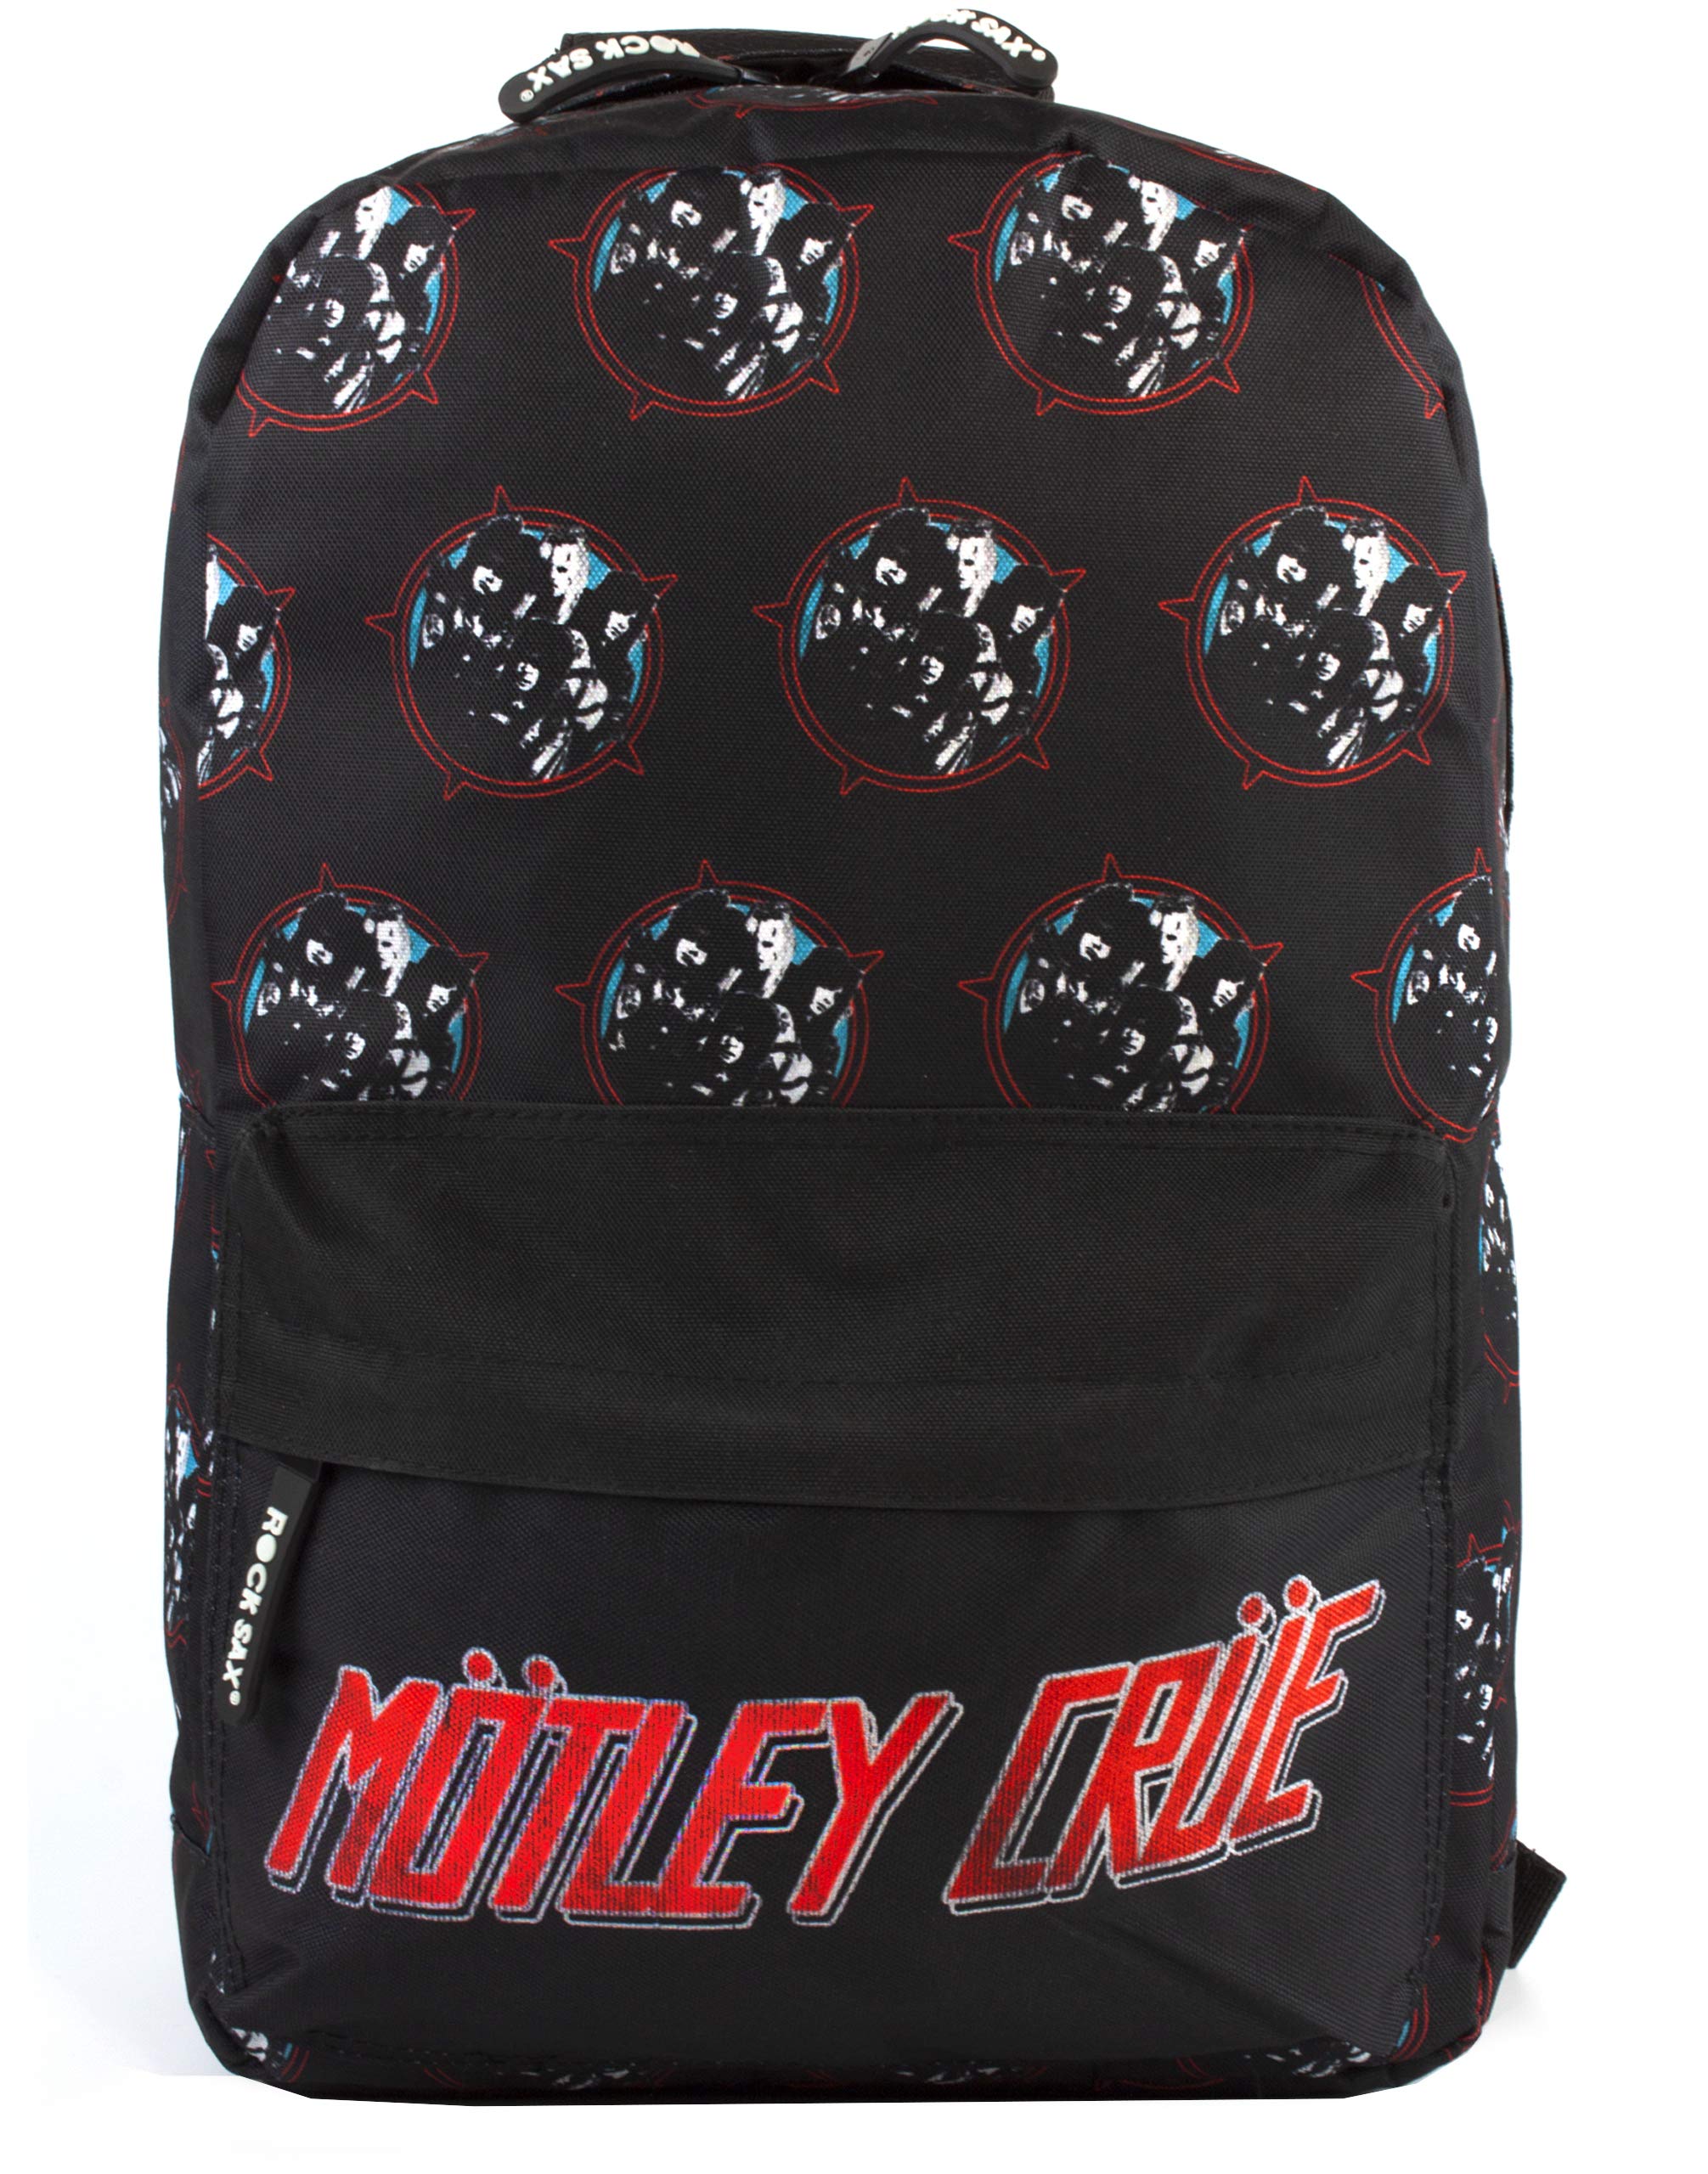 Motley Crue Backpack Bag Heavy Metal Power Band Logo Official Rocksax Black